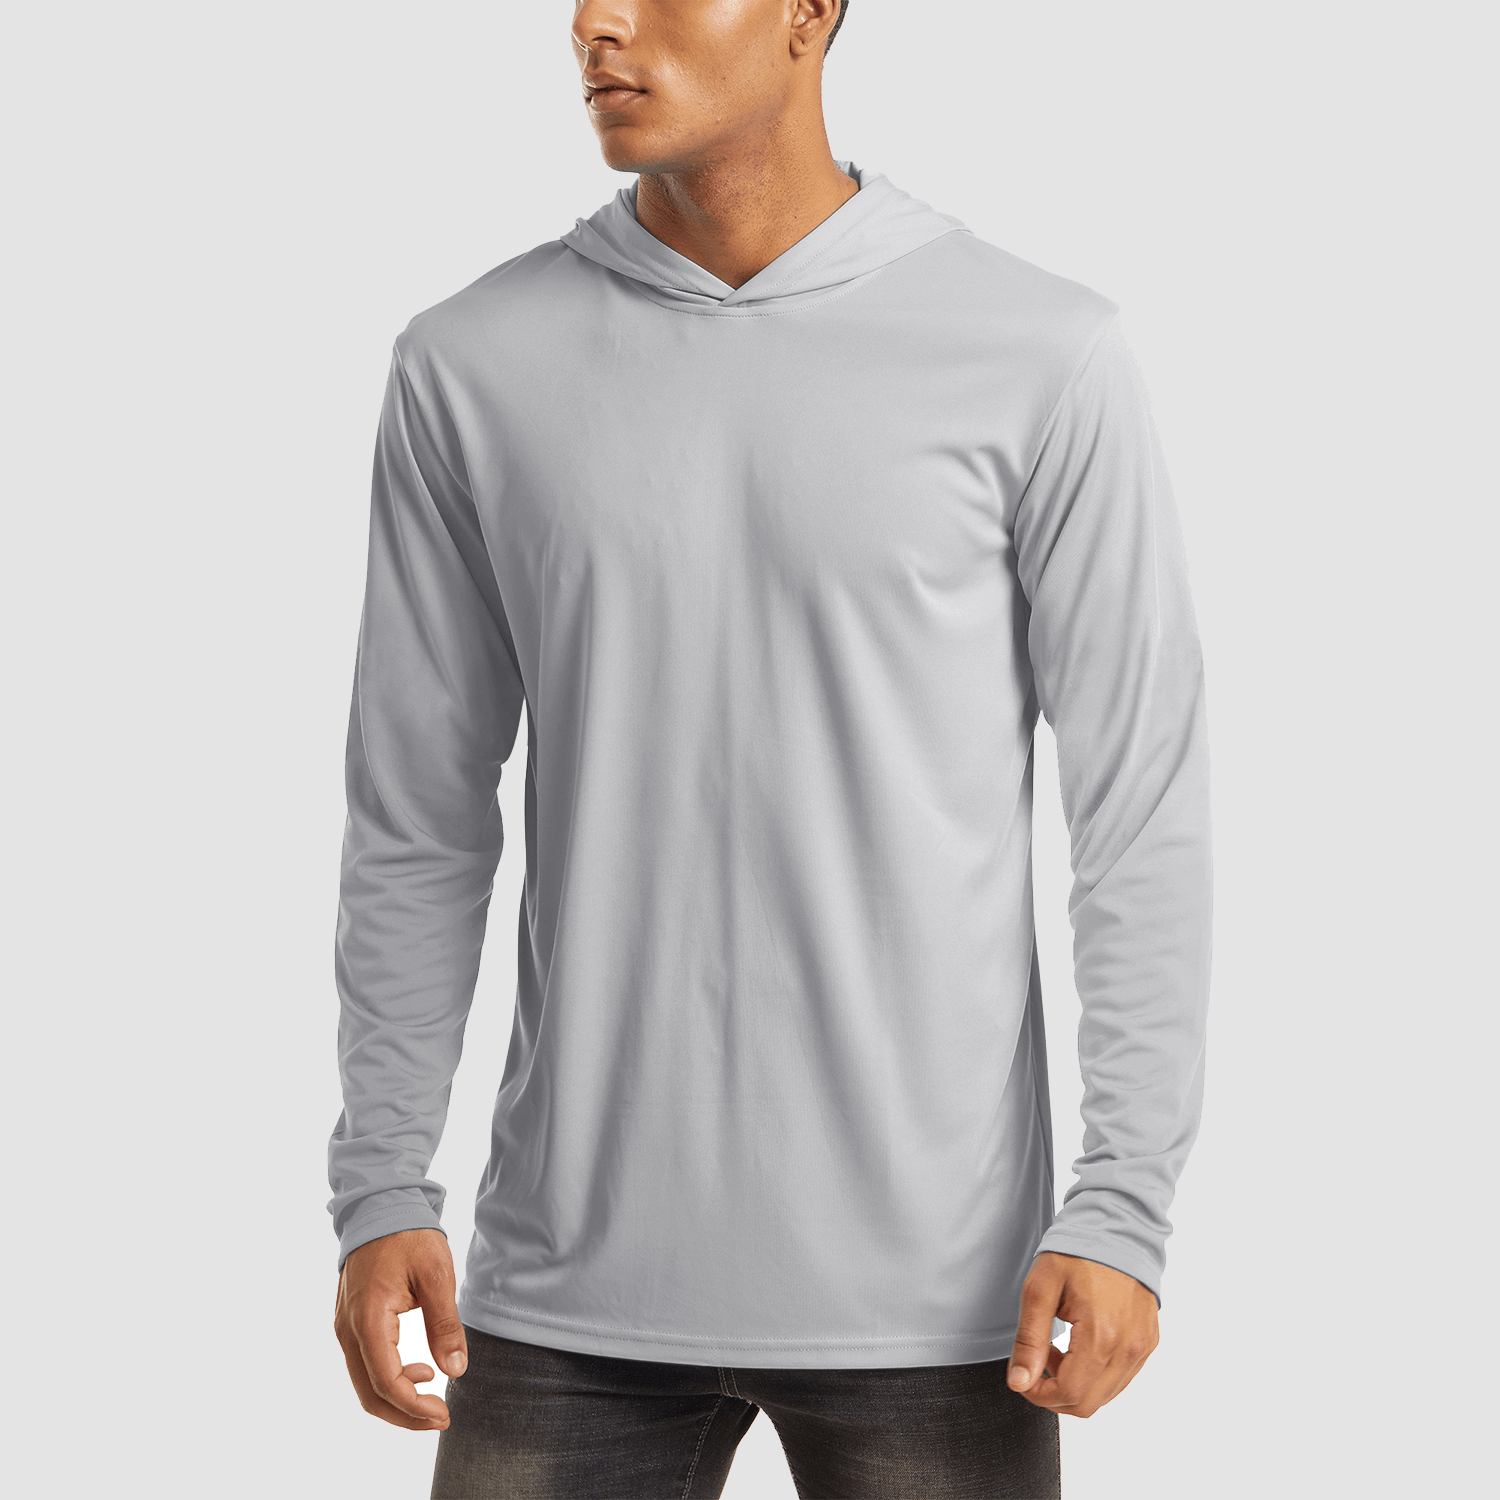 Long Sleeve Hooded Fishing Shirt UPF 50+ – Get Wet Outdoors